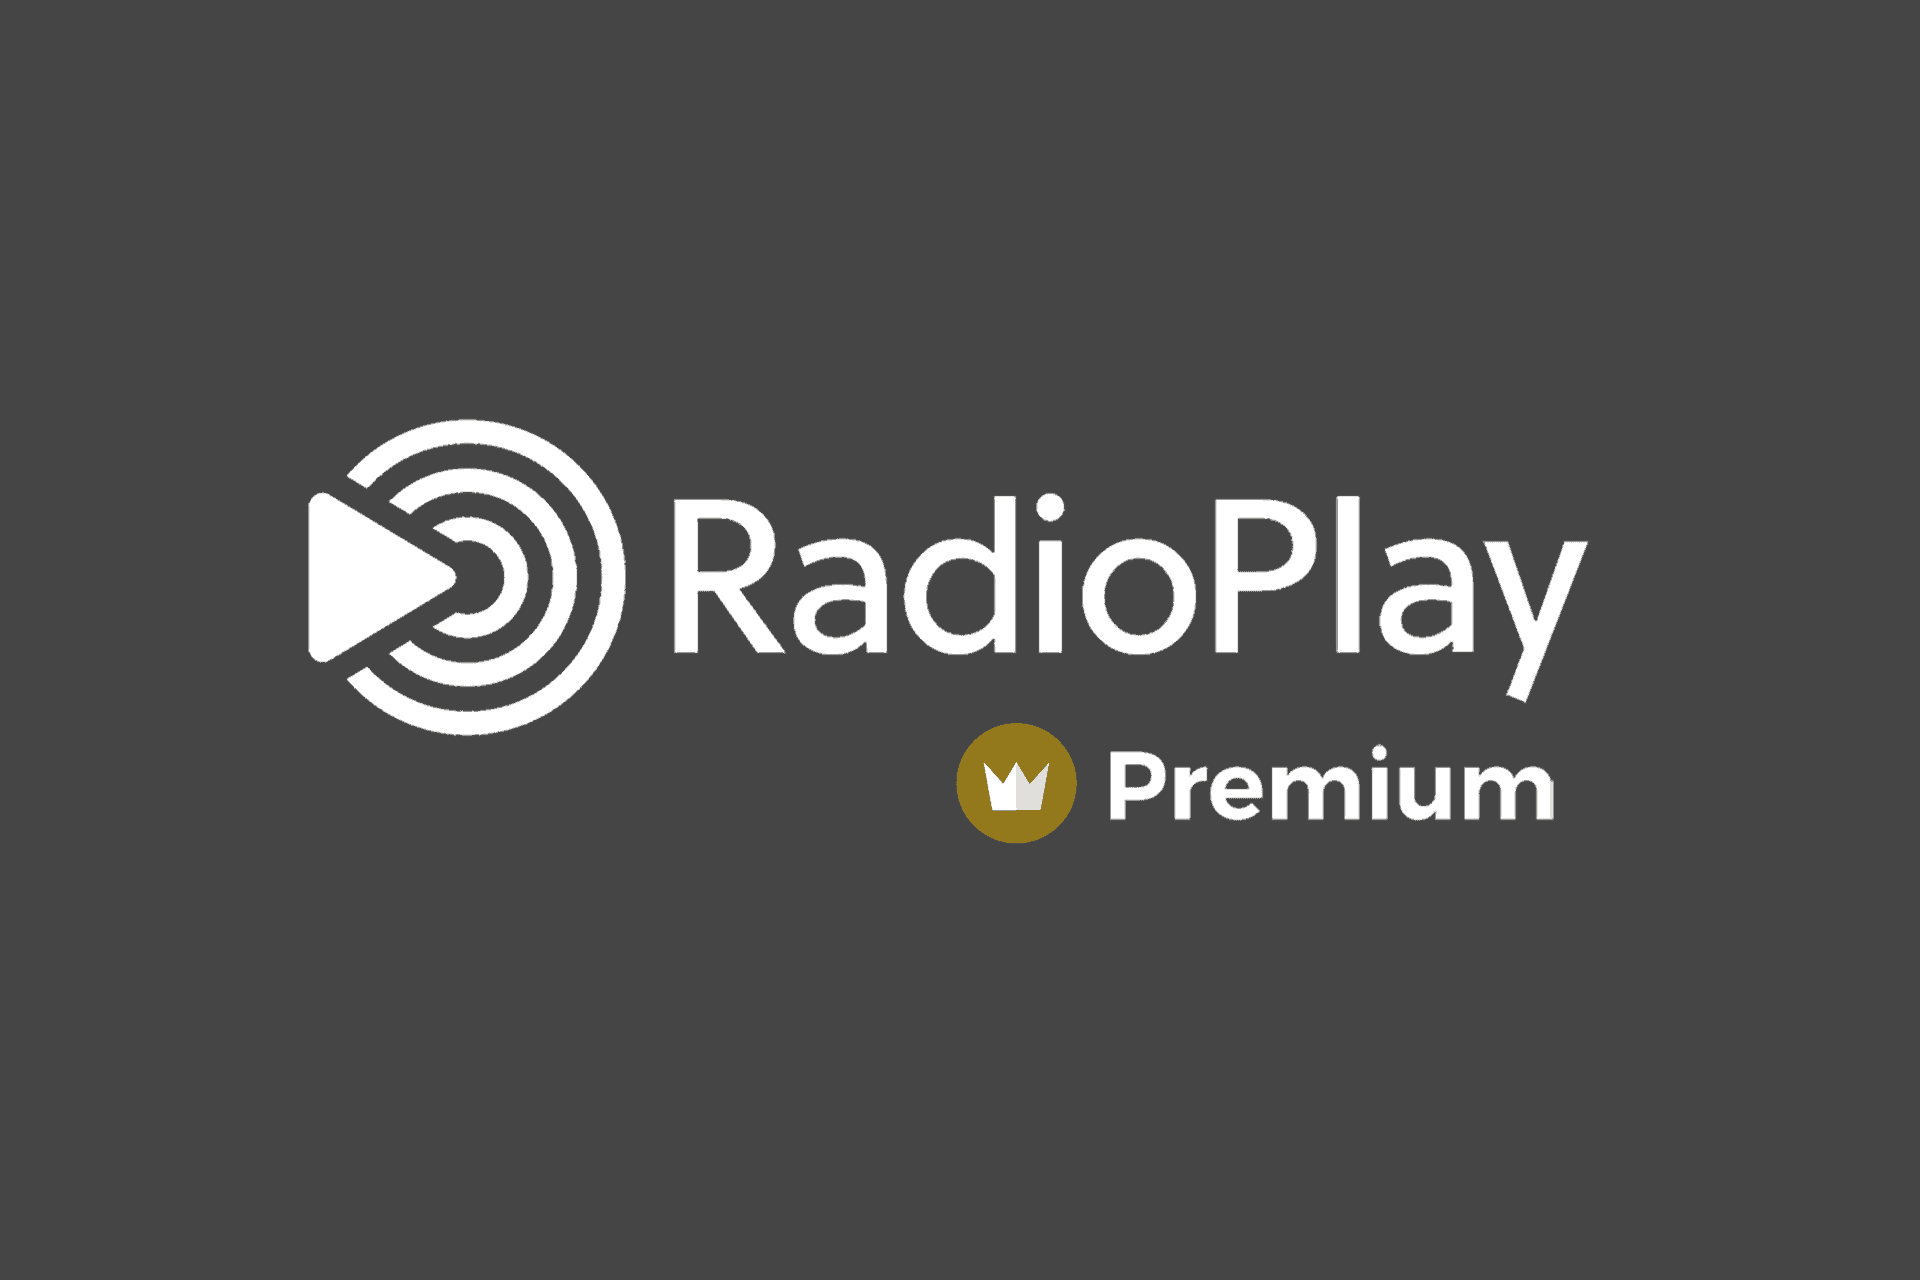 vinter kalender Månenytår Bauer Media lancerer Premium radio på Radioplay - Bauer Media